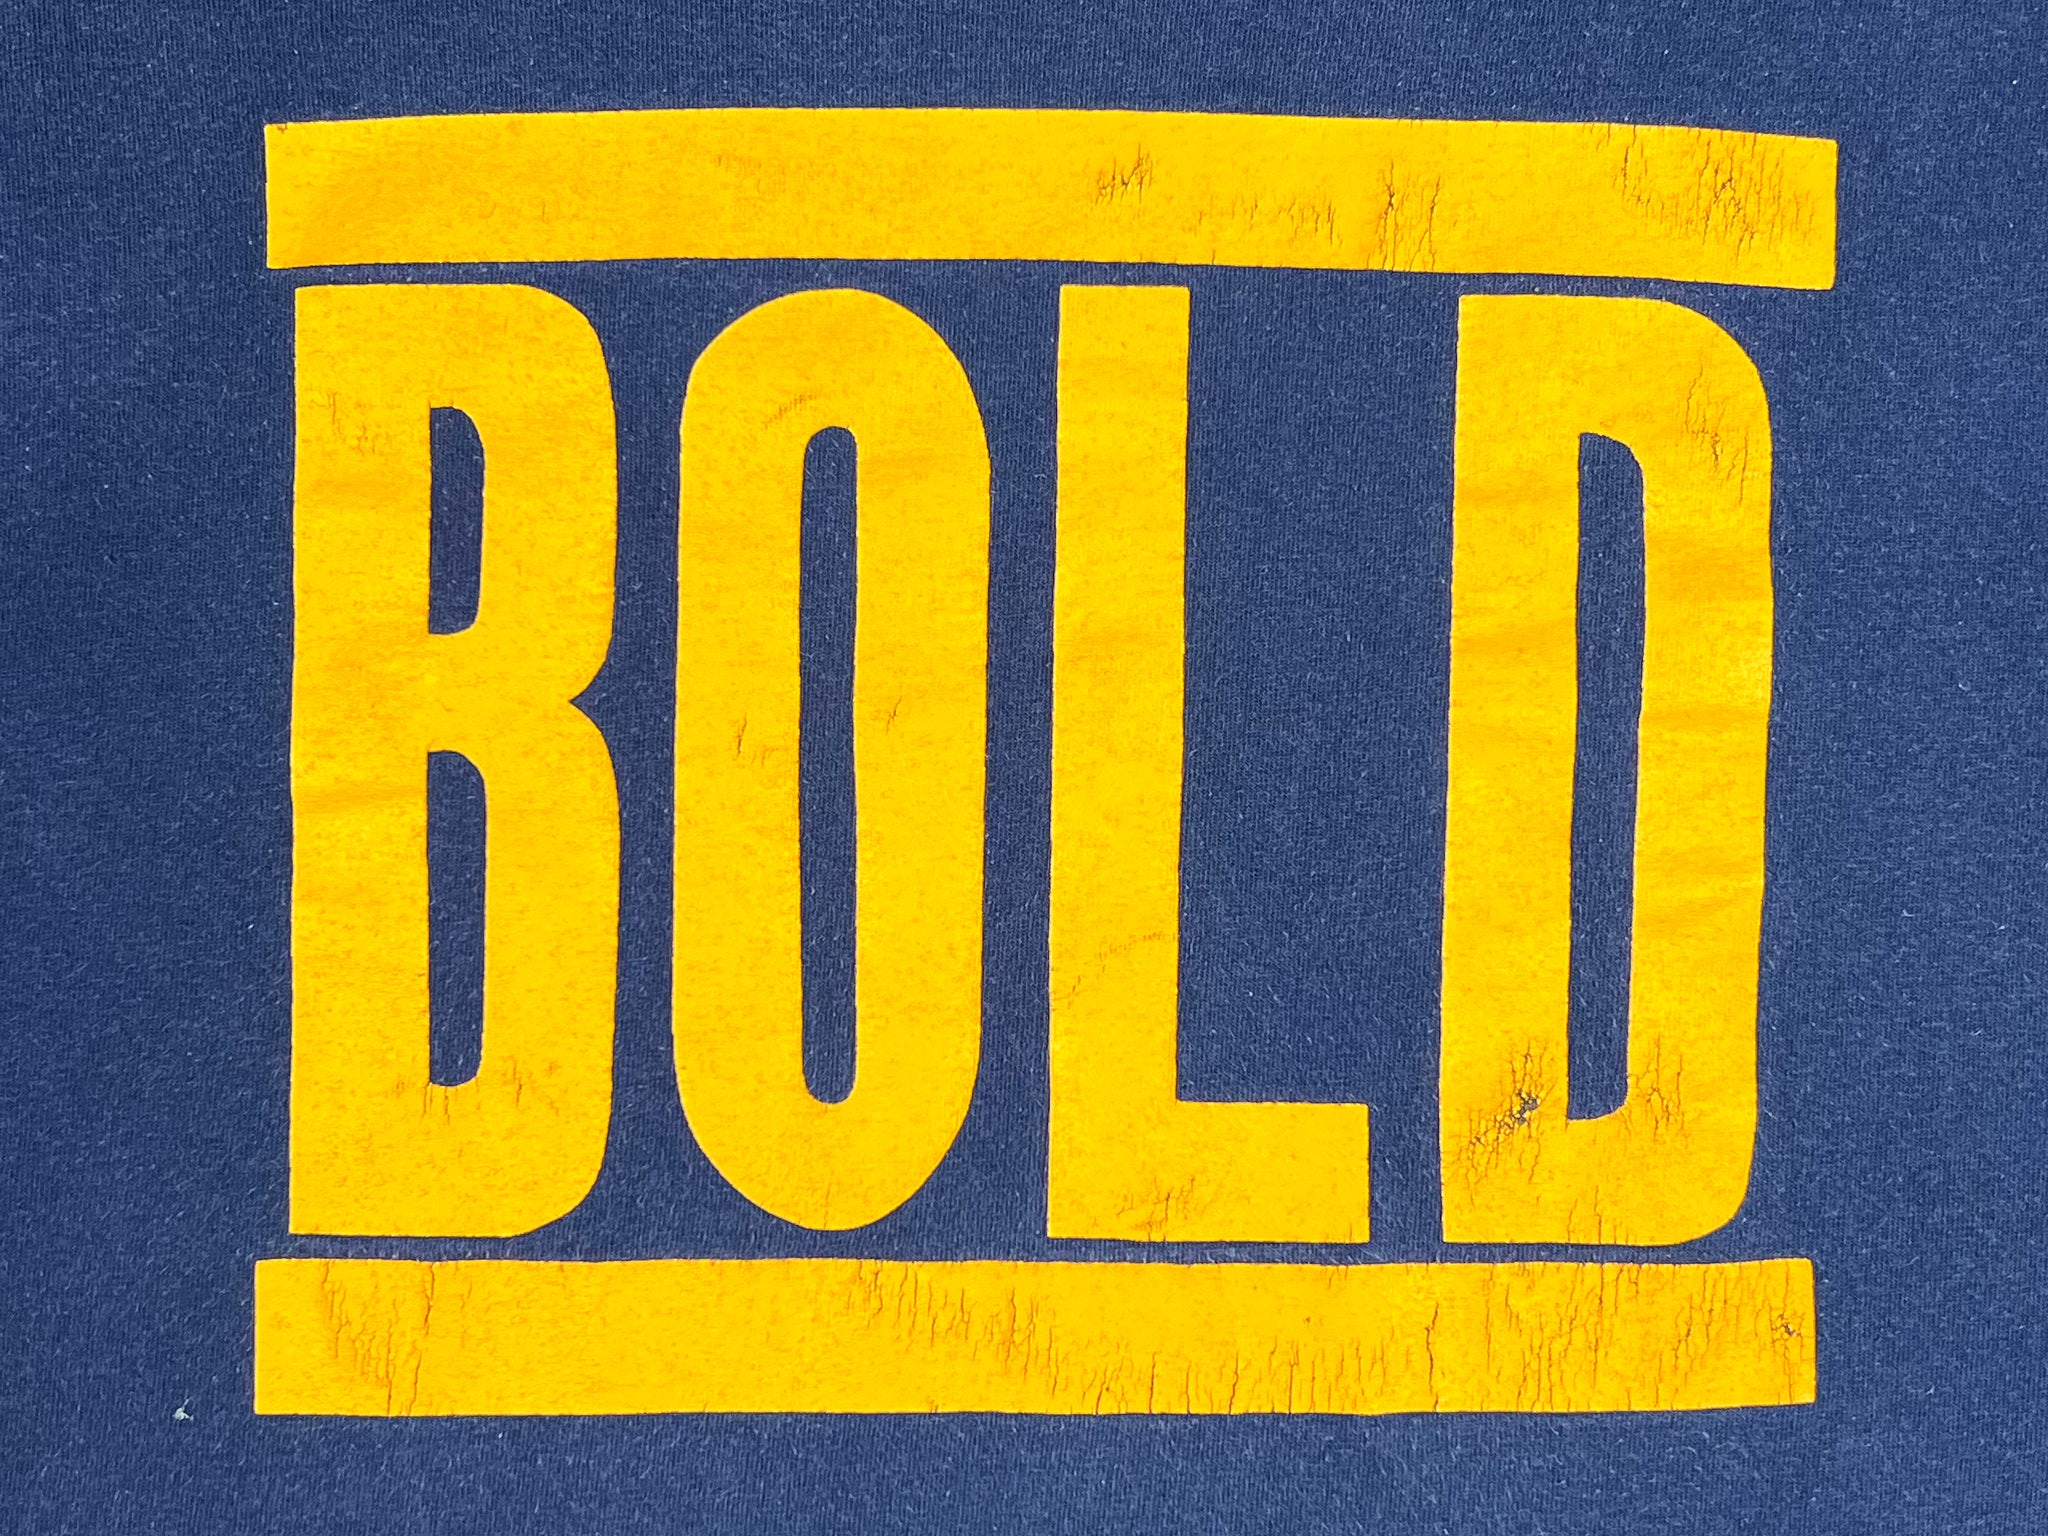 Bold Revelation Records T-Shirt